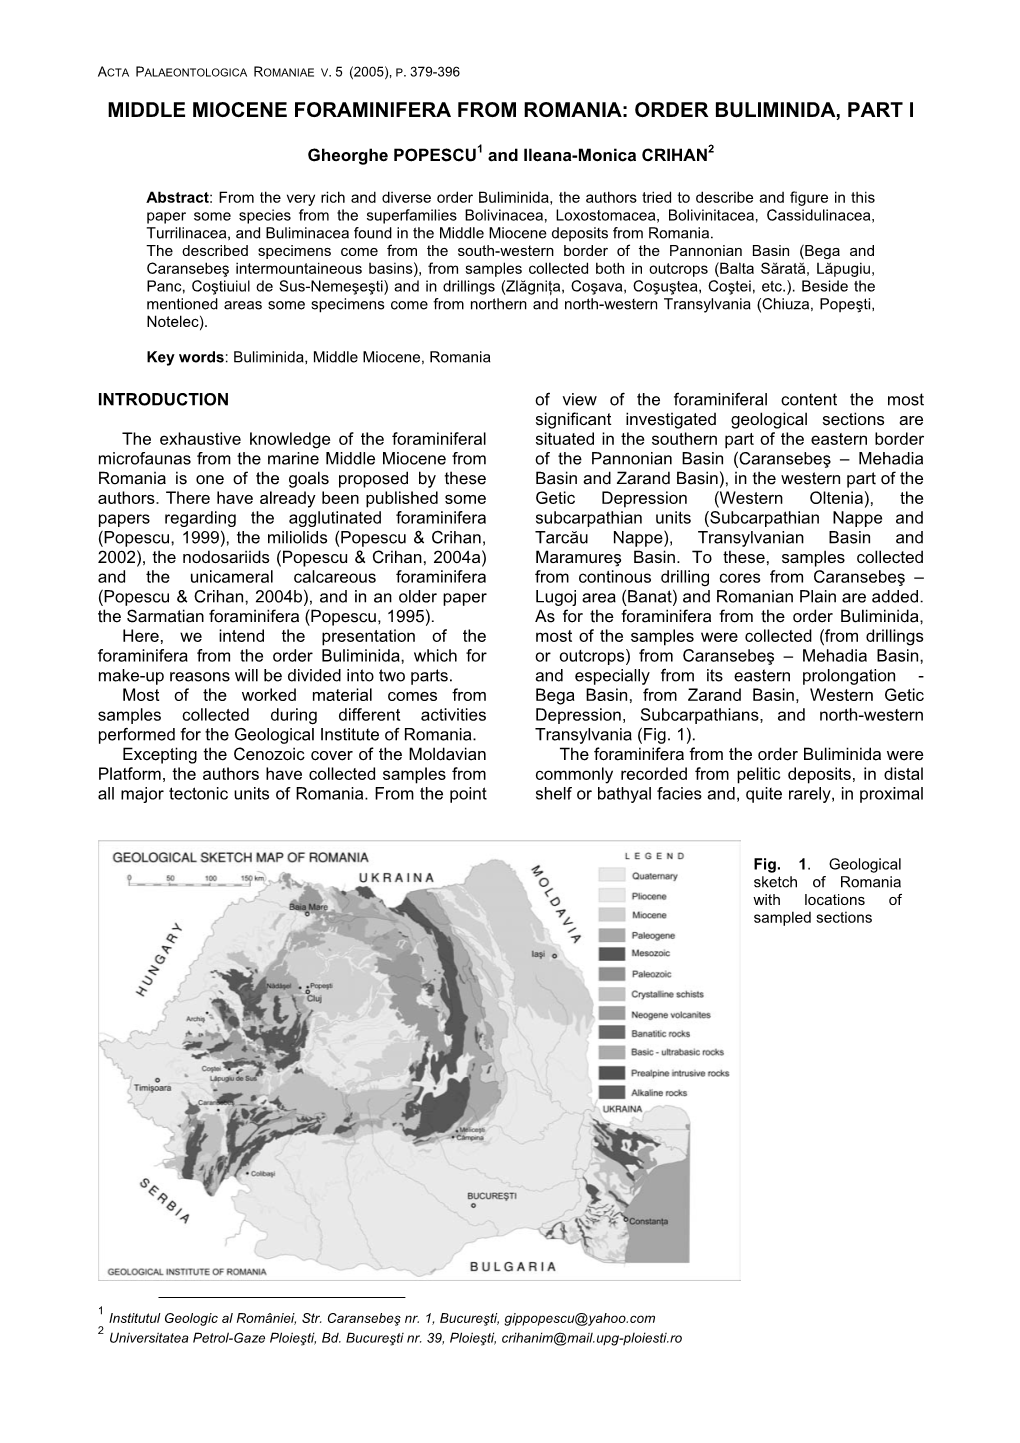 Middle Miocene Foraminifera from Romania: Order Buliminida, Part I